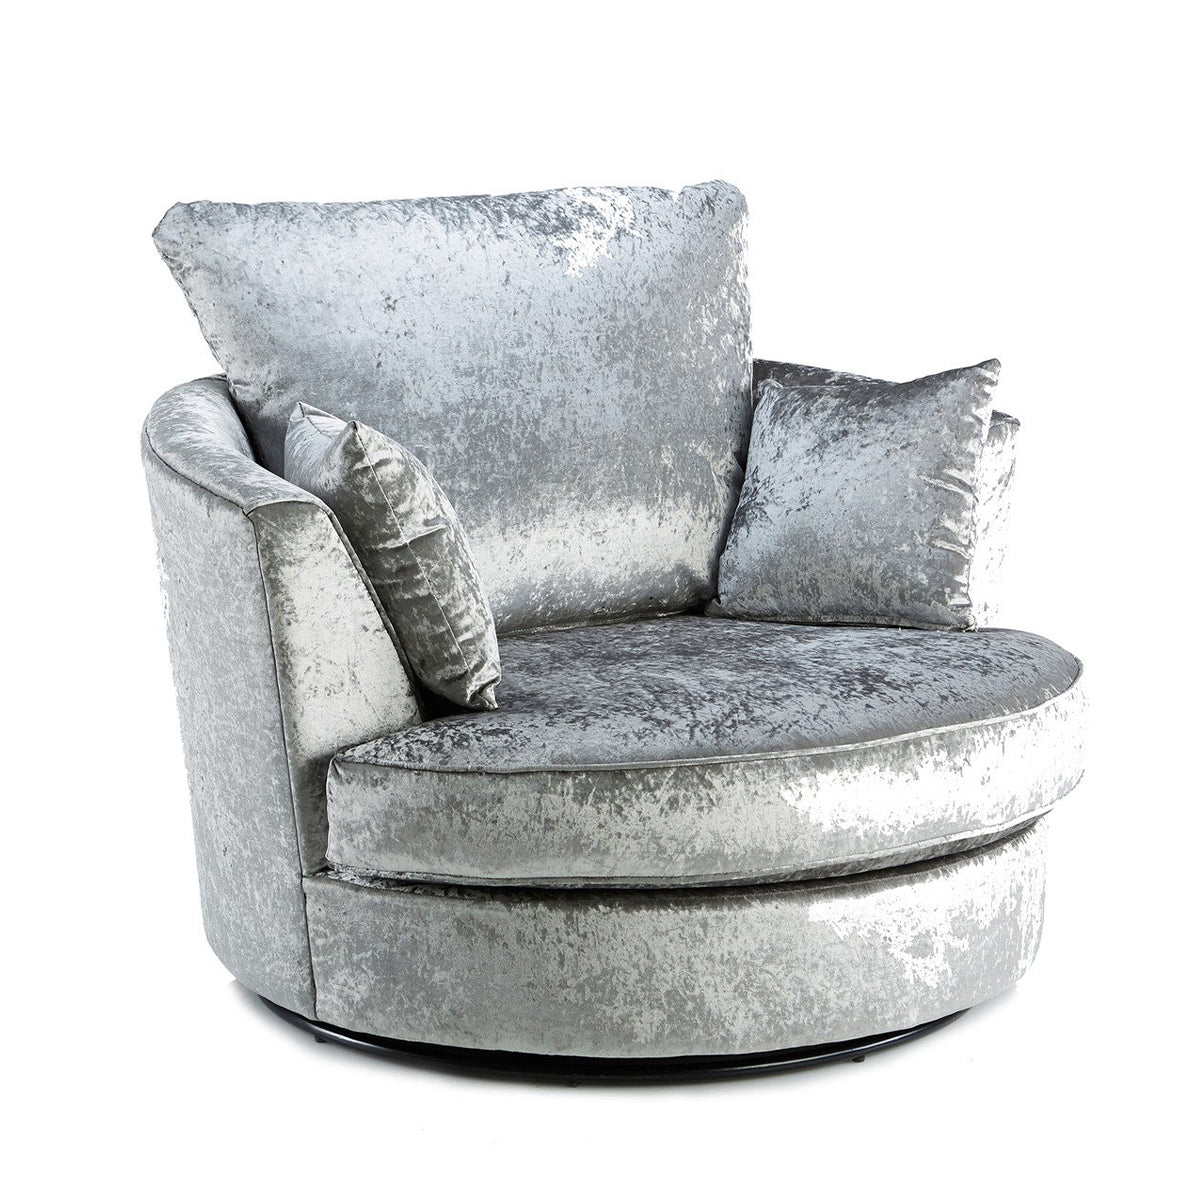 Arabia Crushed Velvet 2 Seater Sofa - Silver